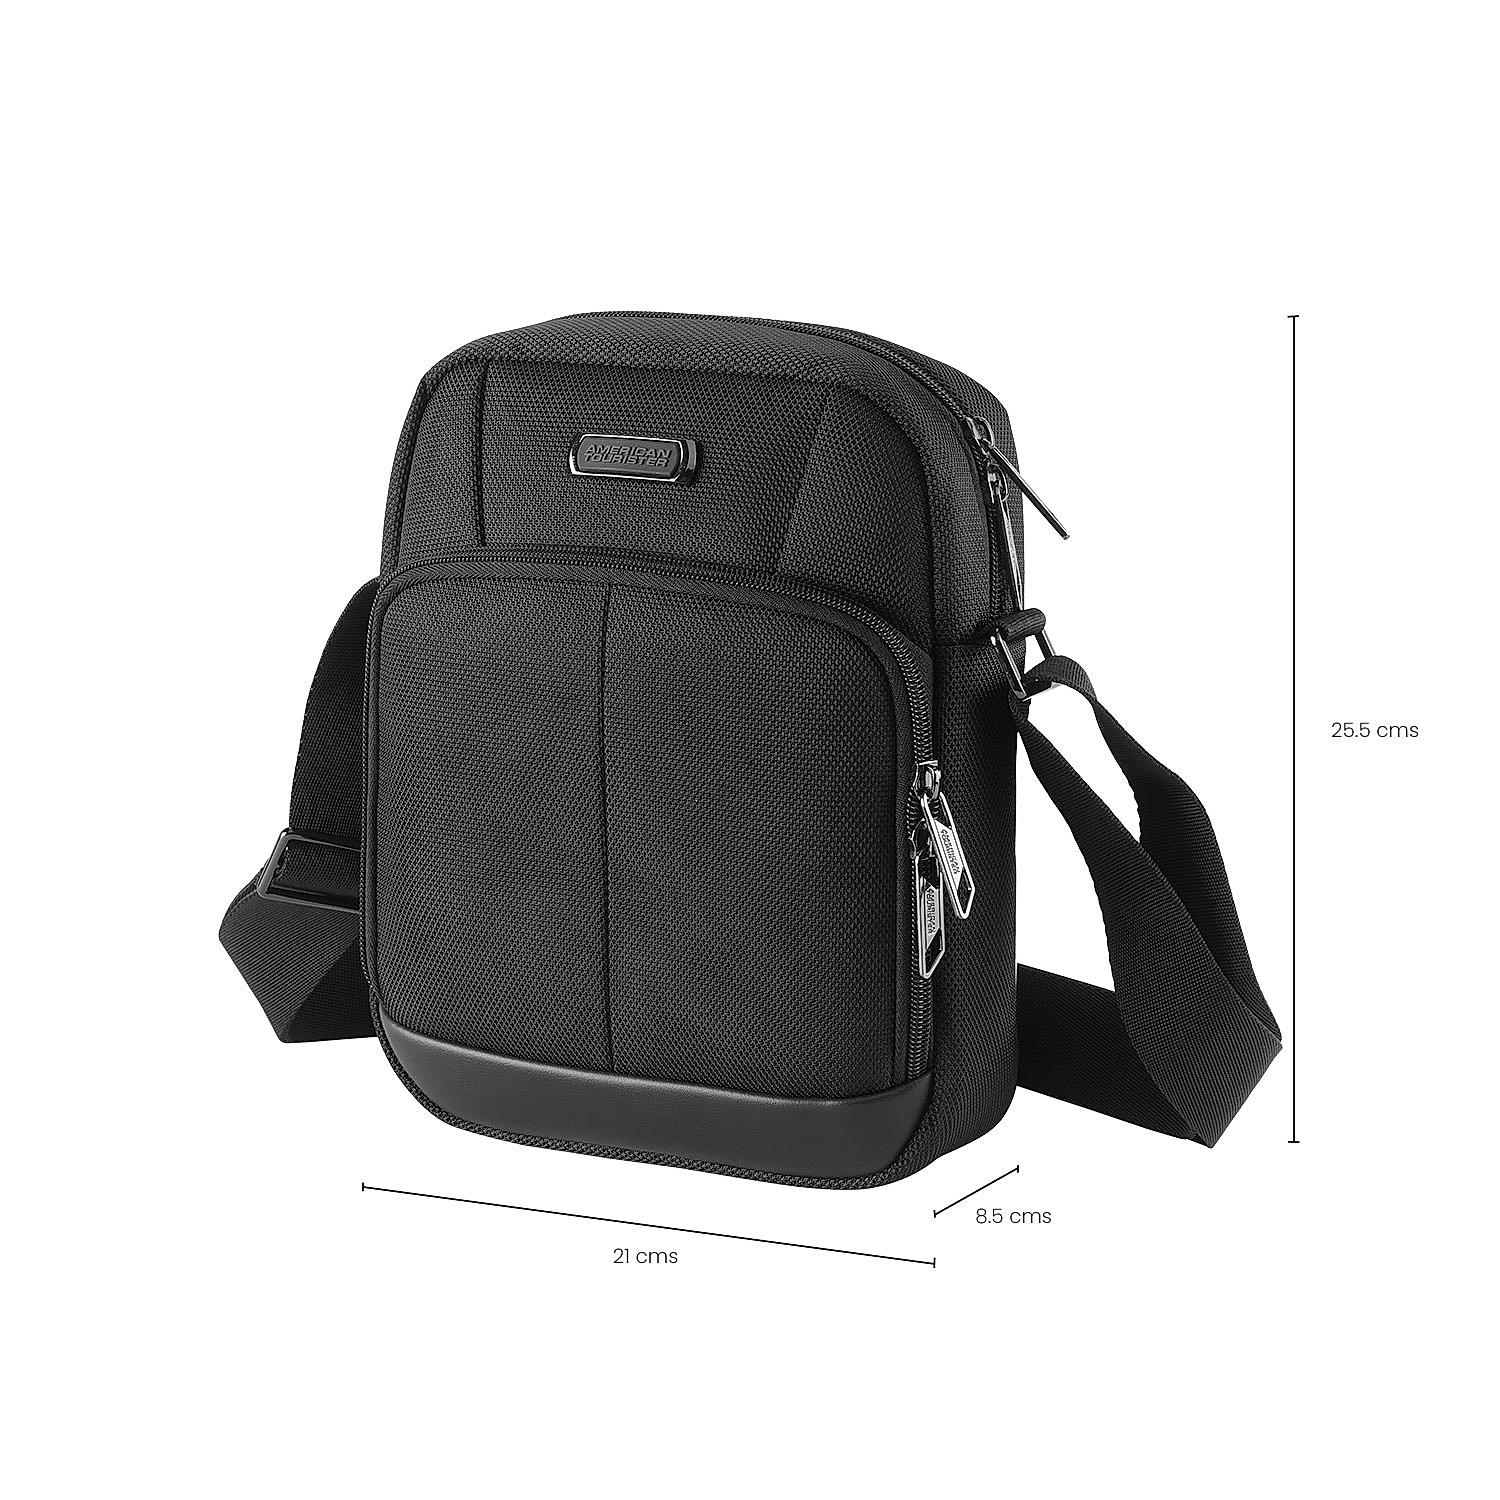 Amazon.com: Protec 3/4 STANDARD BASS BAG,Black : Musical Instruments